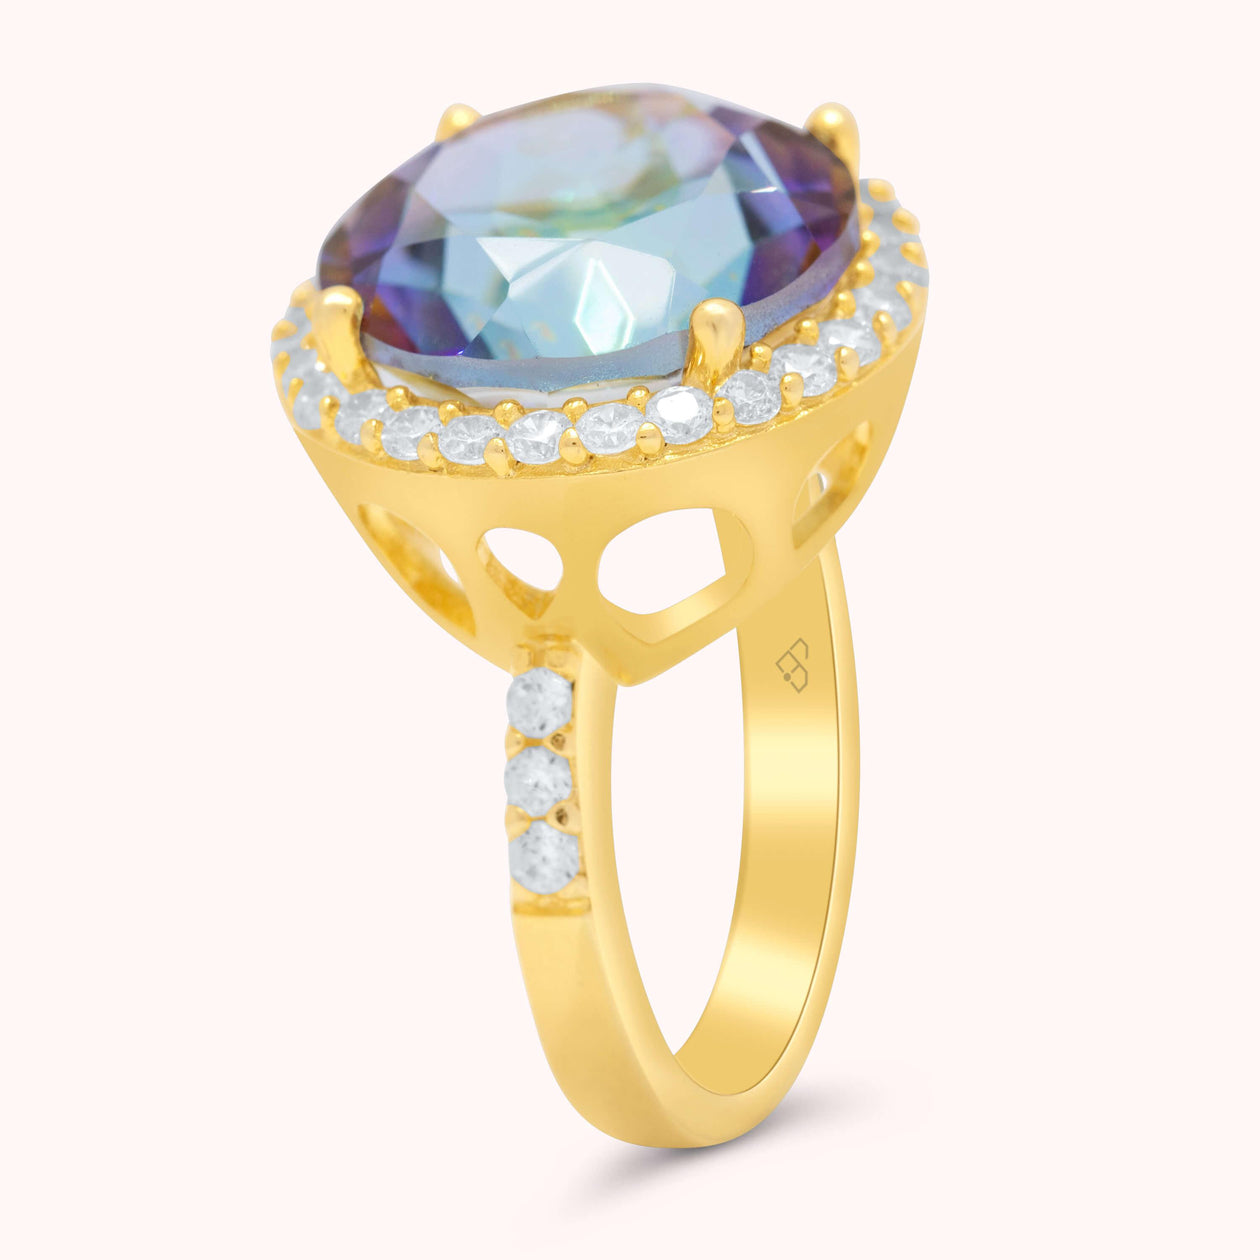 Shop Online The Rainbow Quartz Gemstone Gold Ring | Exclusive Design